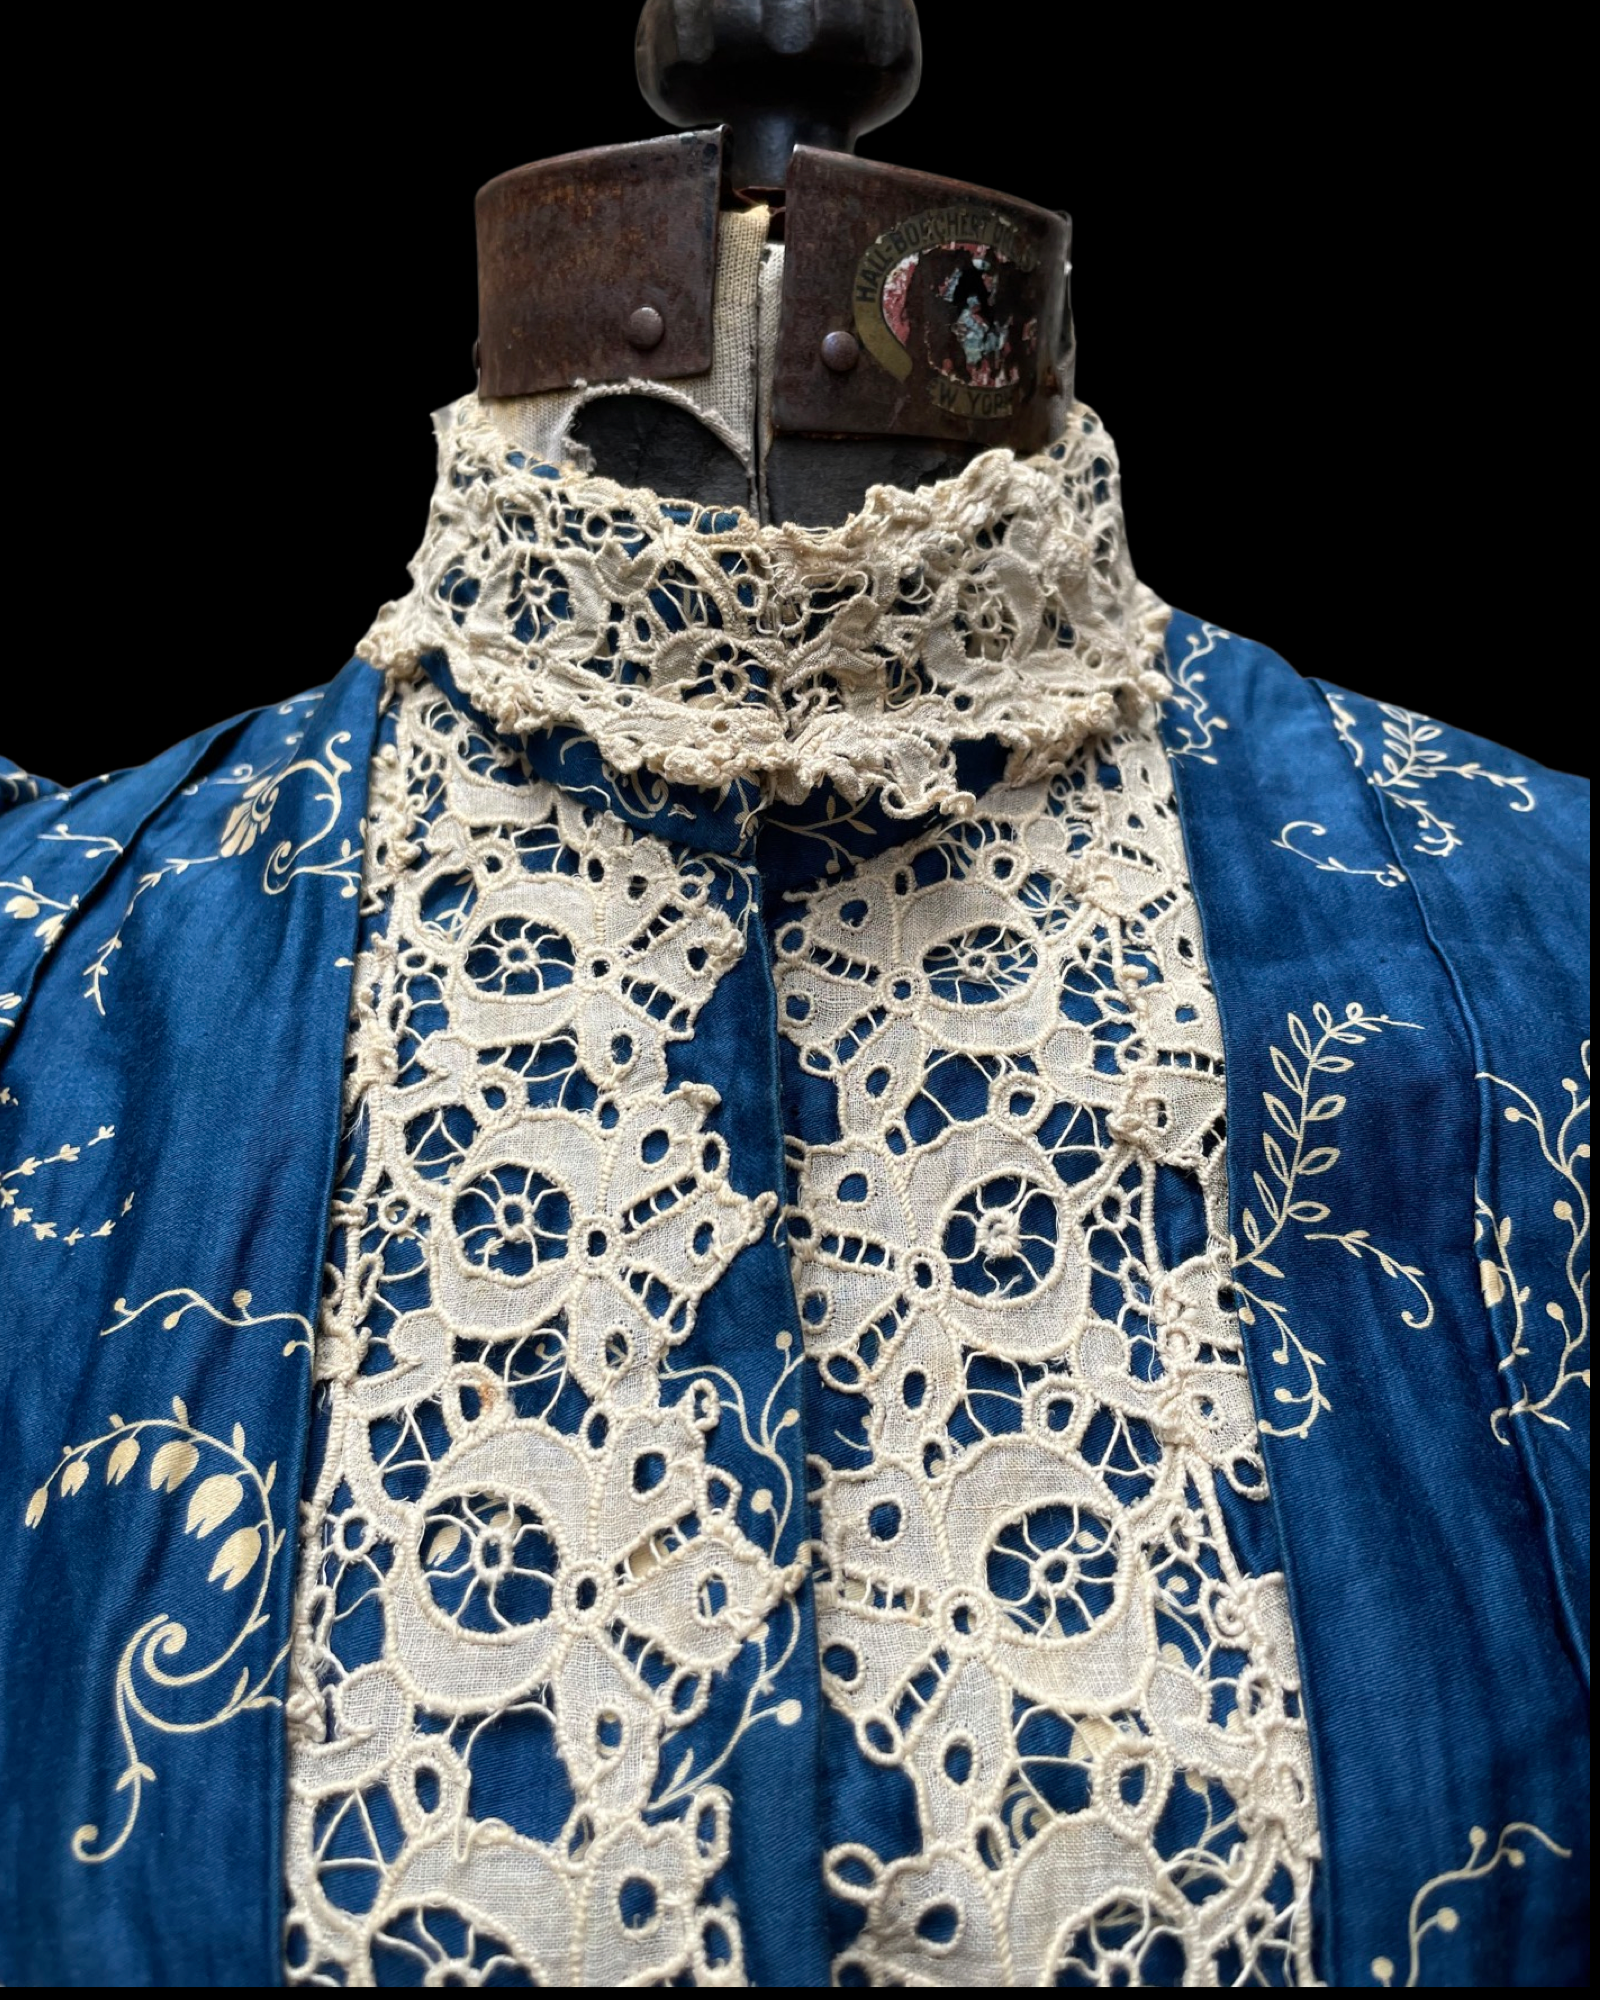 1890s Indigo Printed Cotton Dress